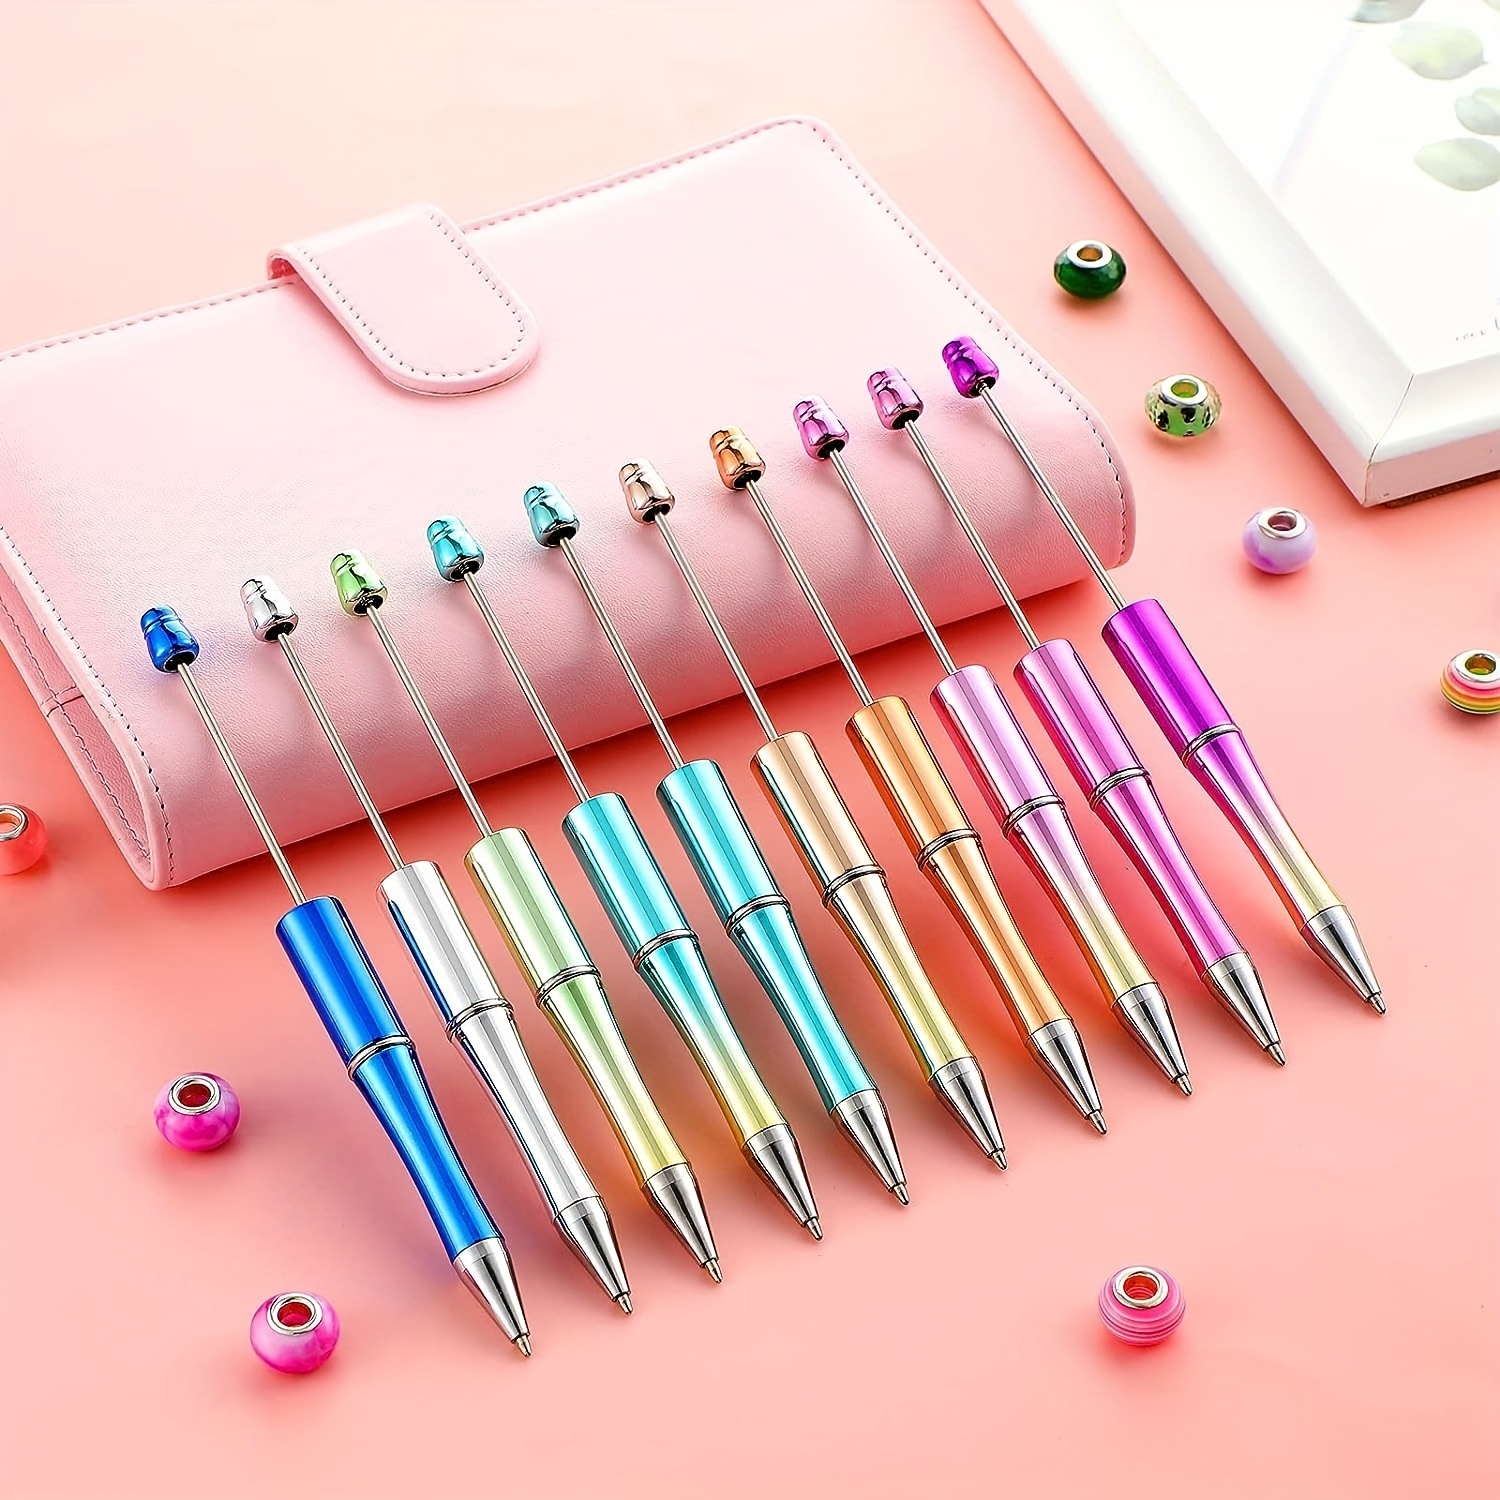 Jspupifip 40 Pieces Beadable Pens With 40 Refills, 10 Color Plastic